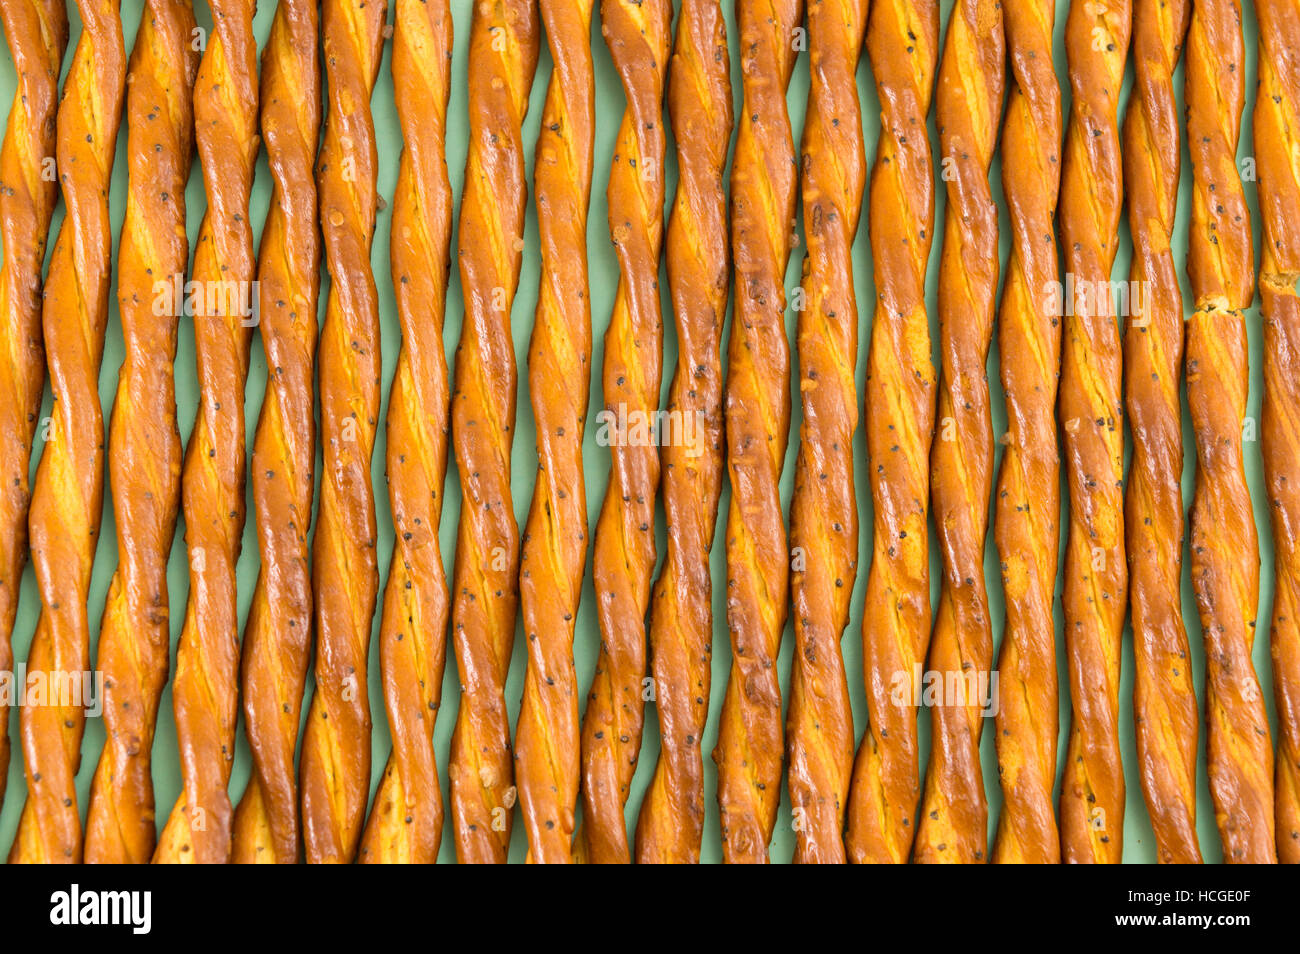 Bunch of salty breadsticks snack background pattern Stock Photo